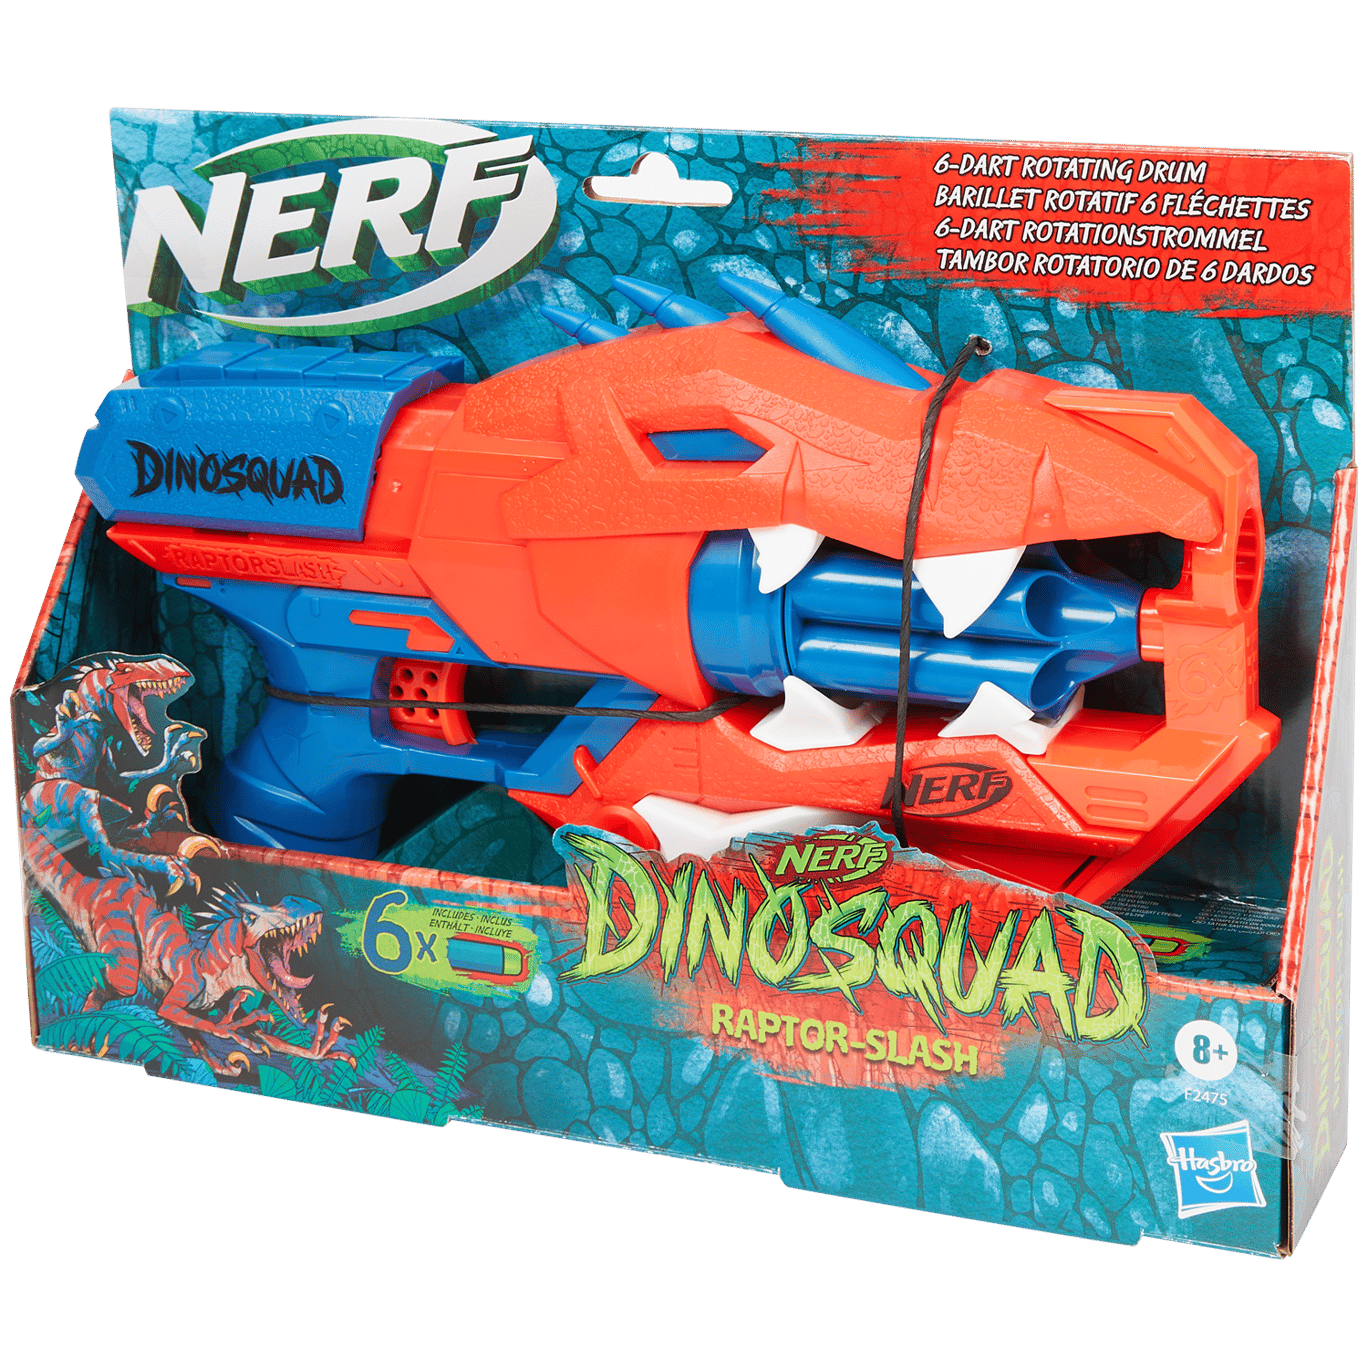 Nerf Dinosquad pijltjesgeweer Raptor-Slash